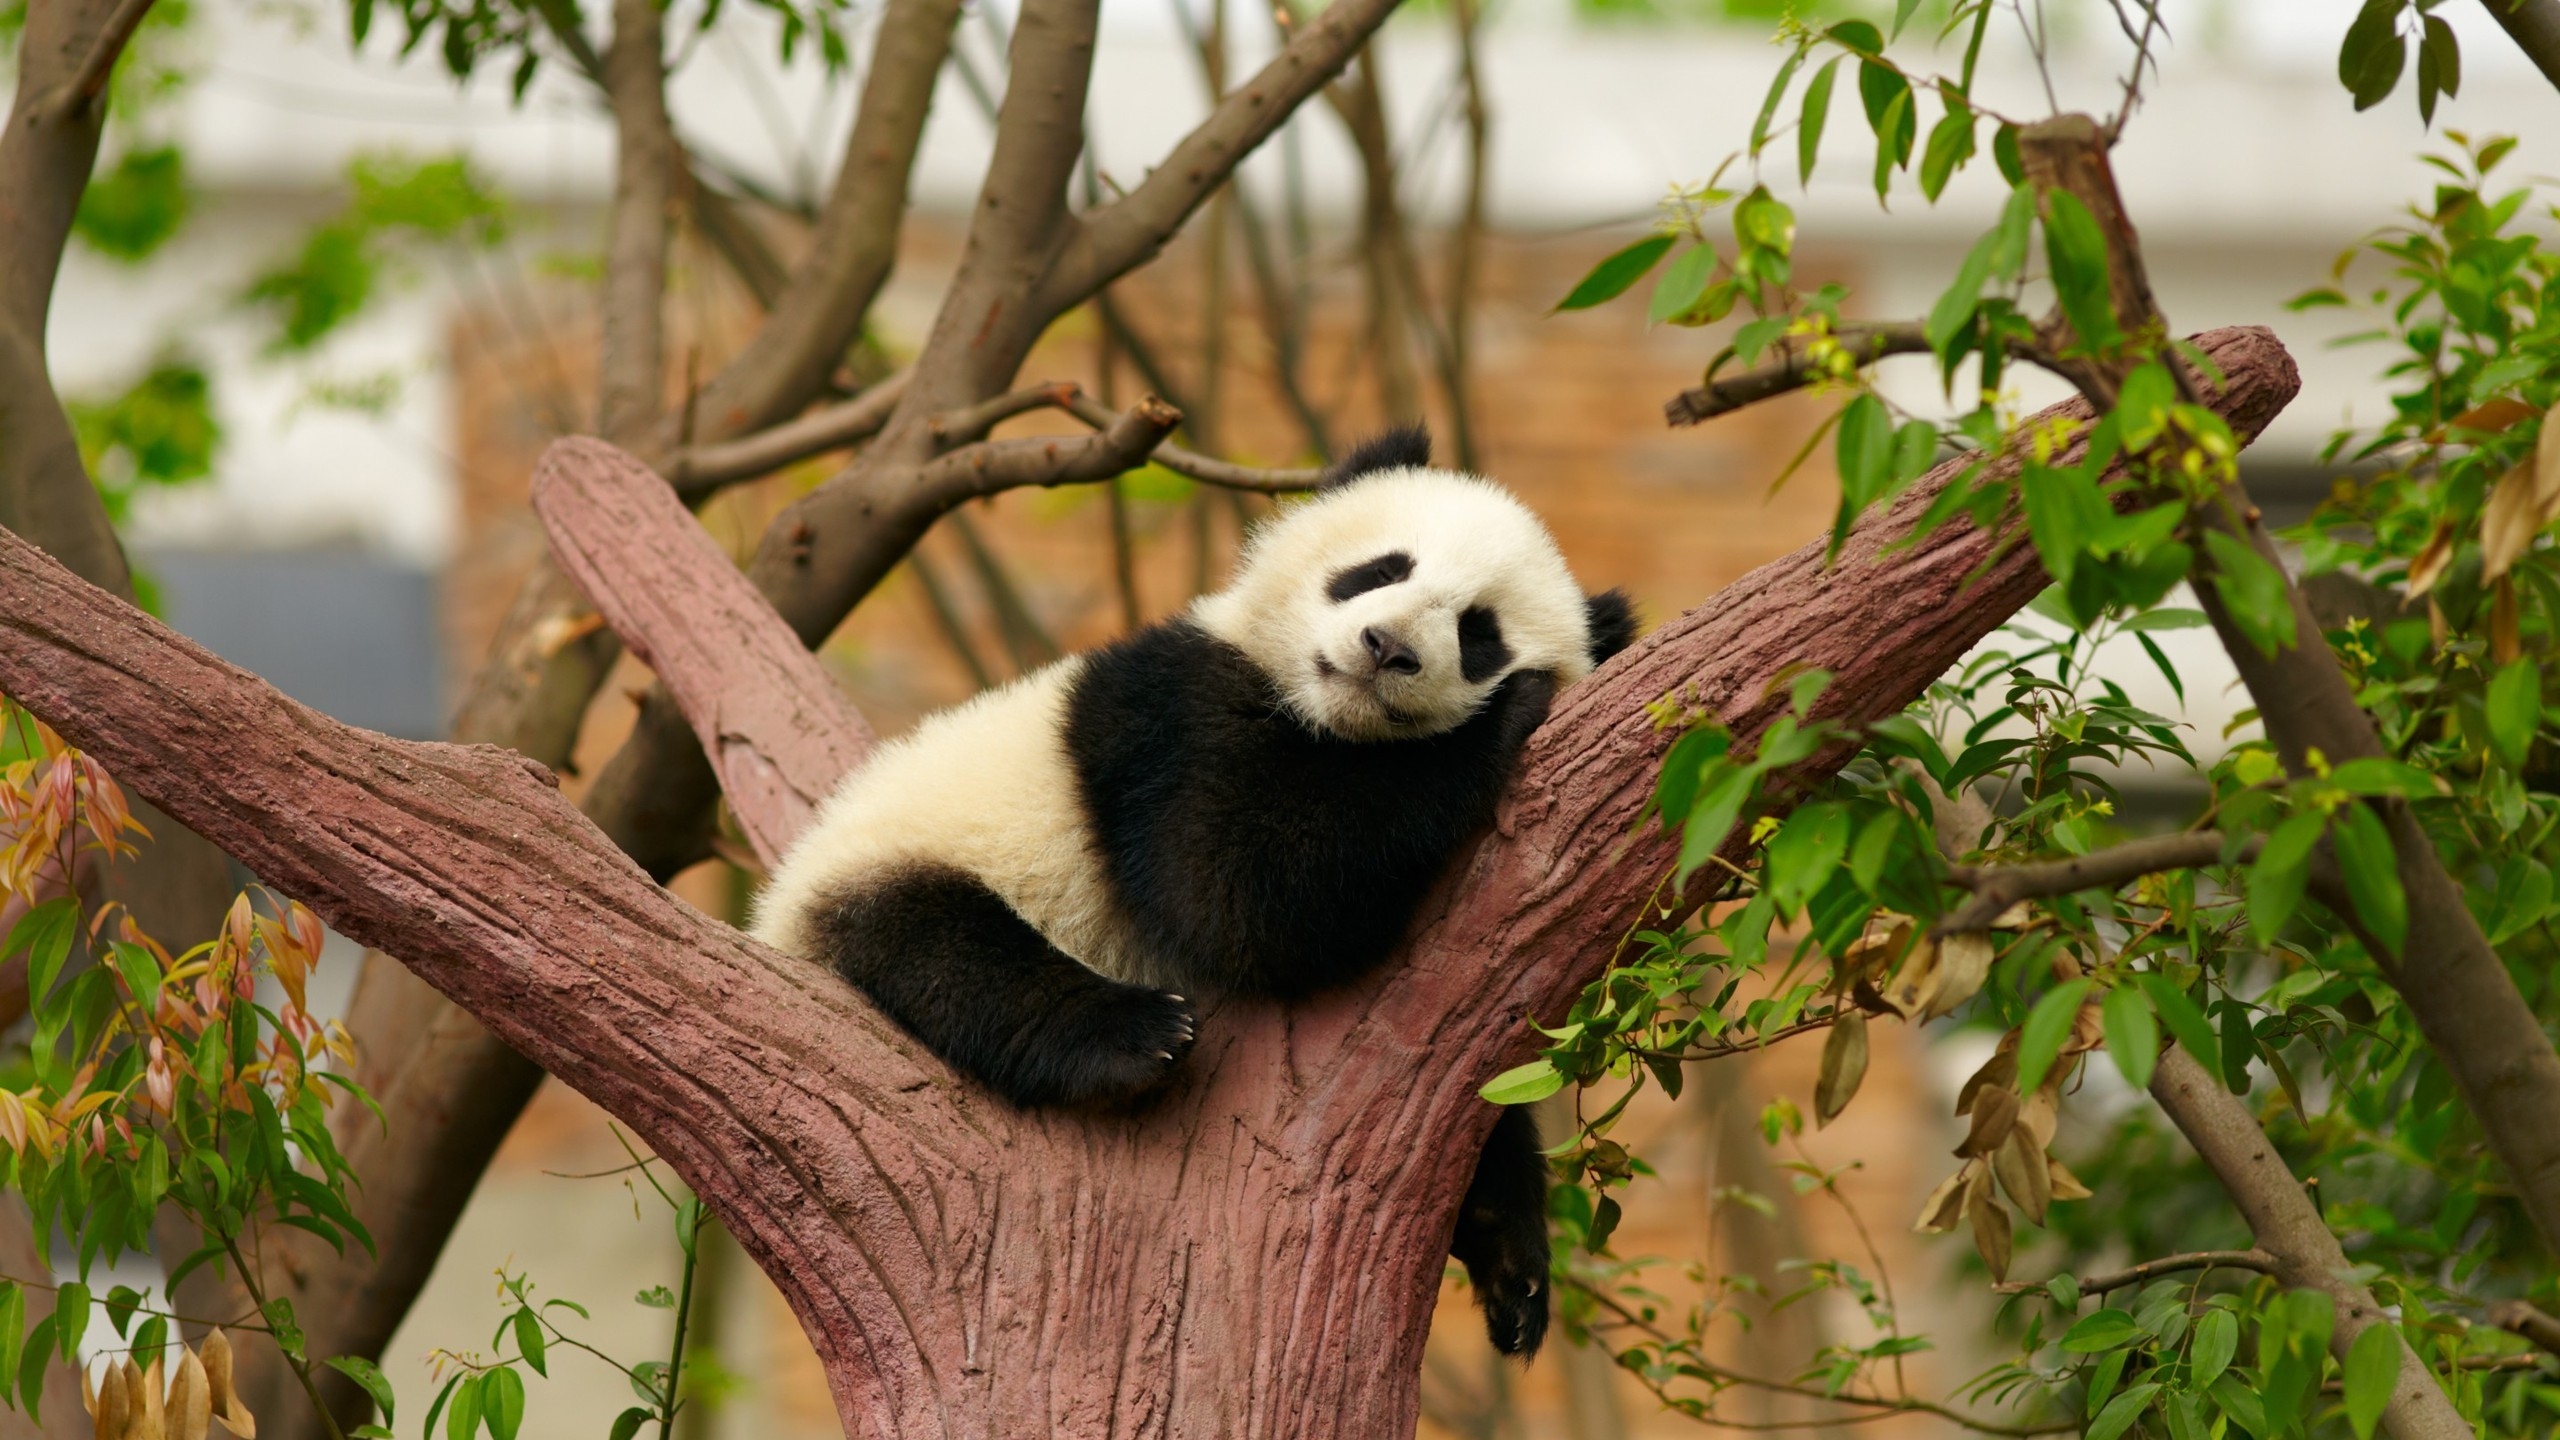 Baby Panda for 2560x1440 HDTV resolution